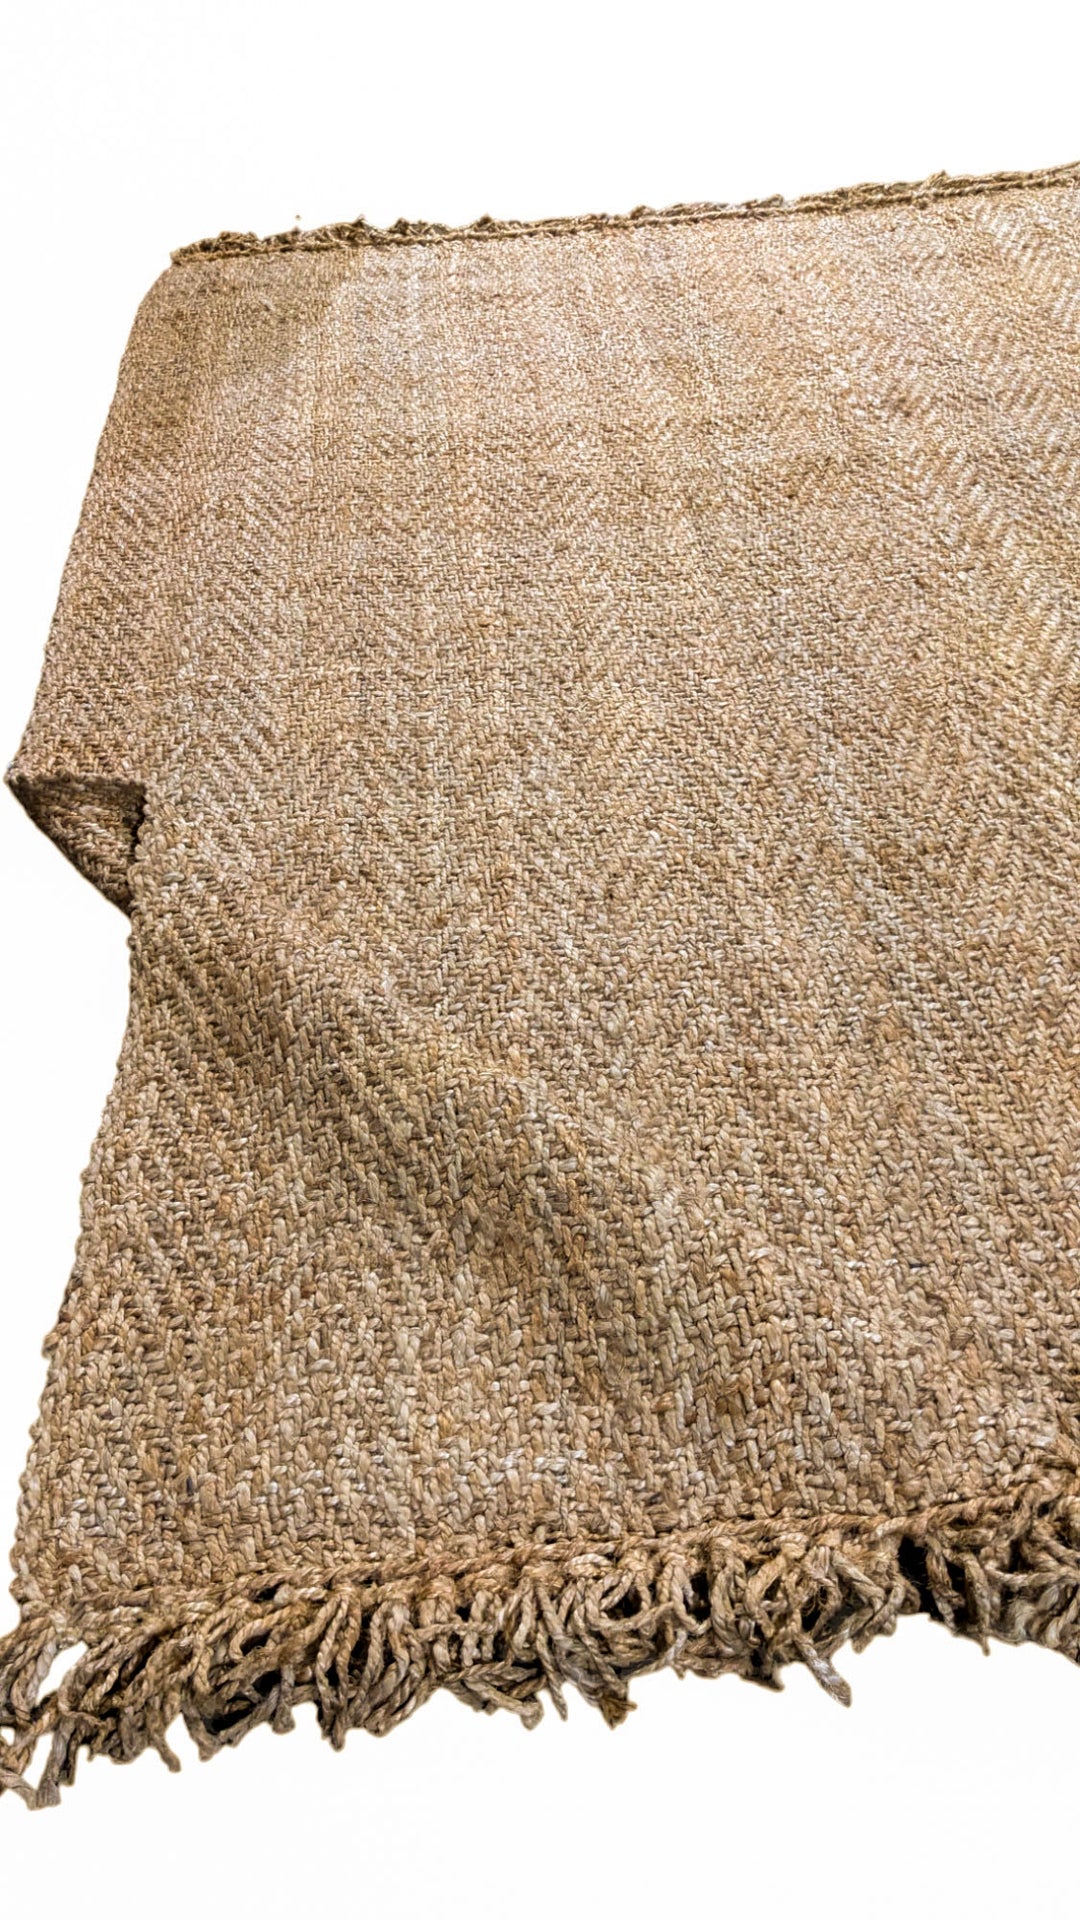 Sahar - Size: 10 x 8. 2 - Imam Carpet Co